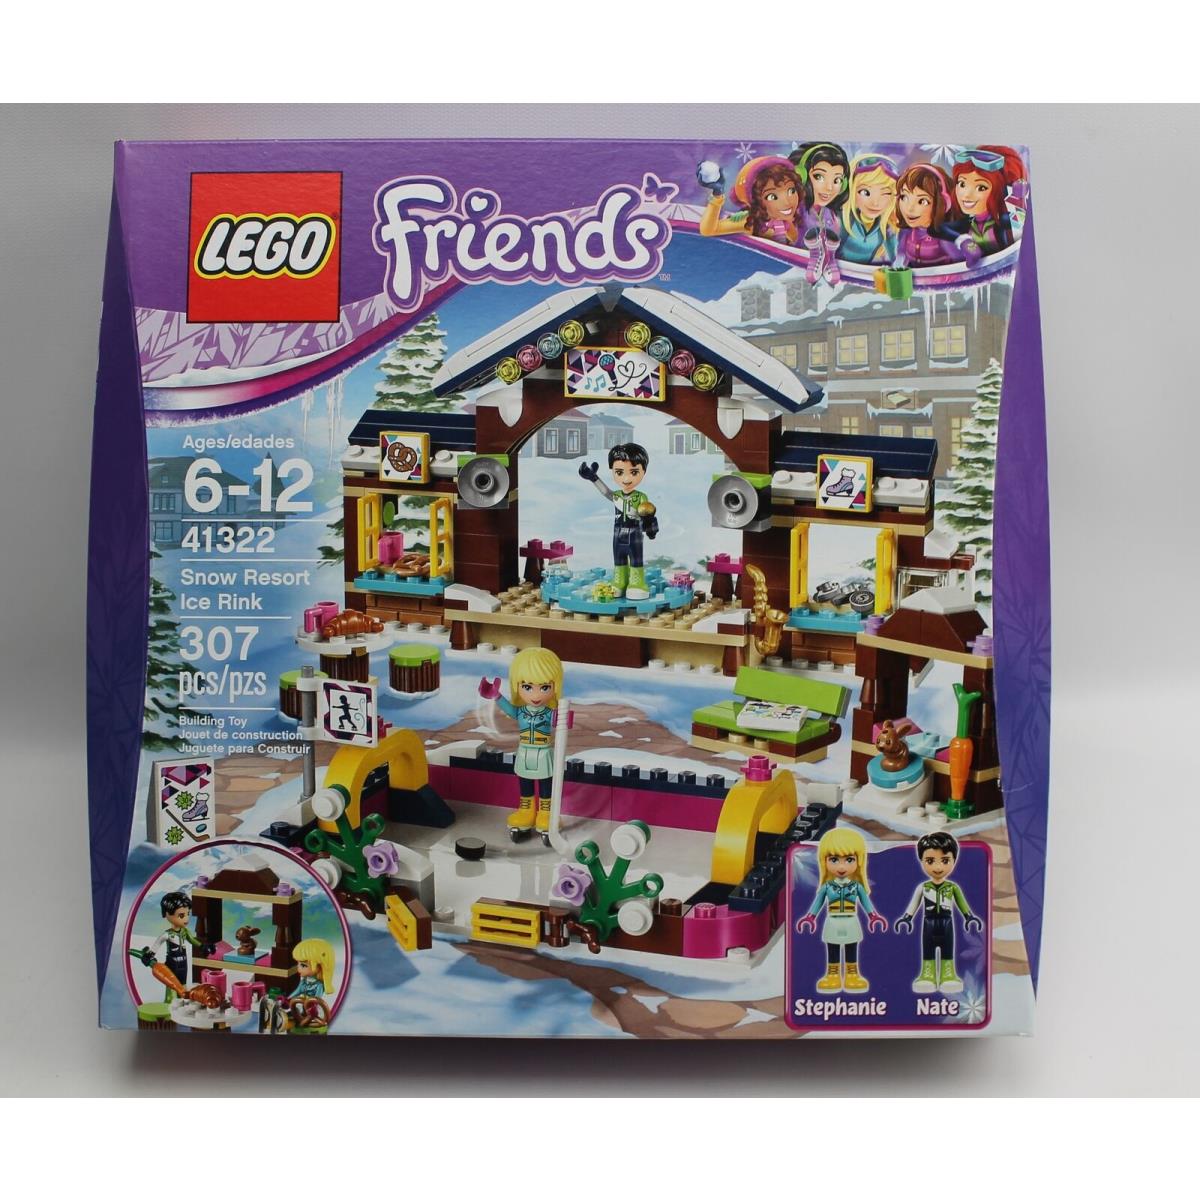 Lego Friends Snow Resort Ice Rink Set 41322